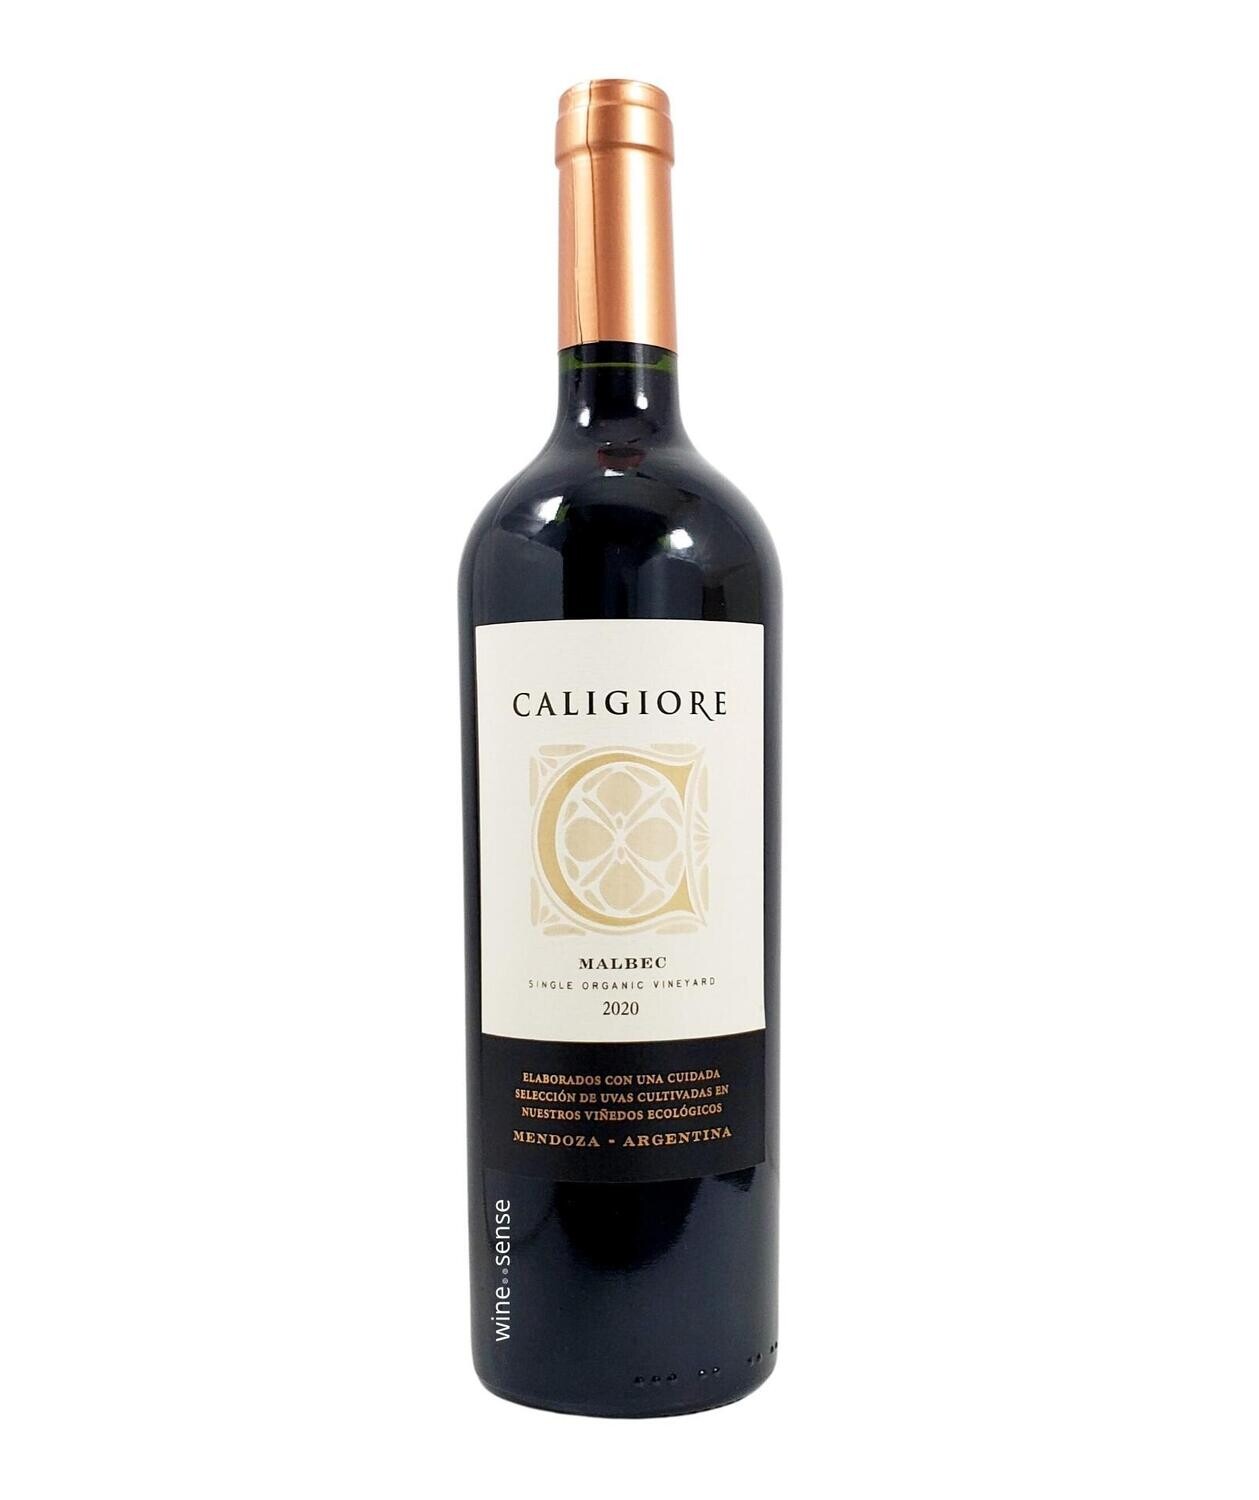 Caligiore Single Organic Vineyard, Malbec